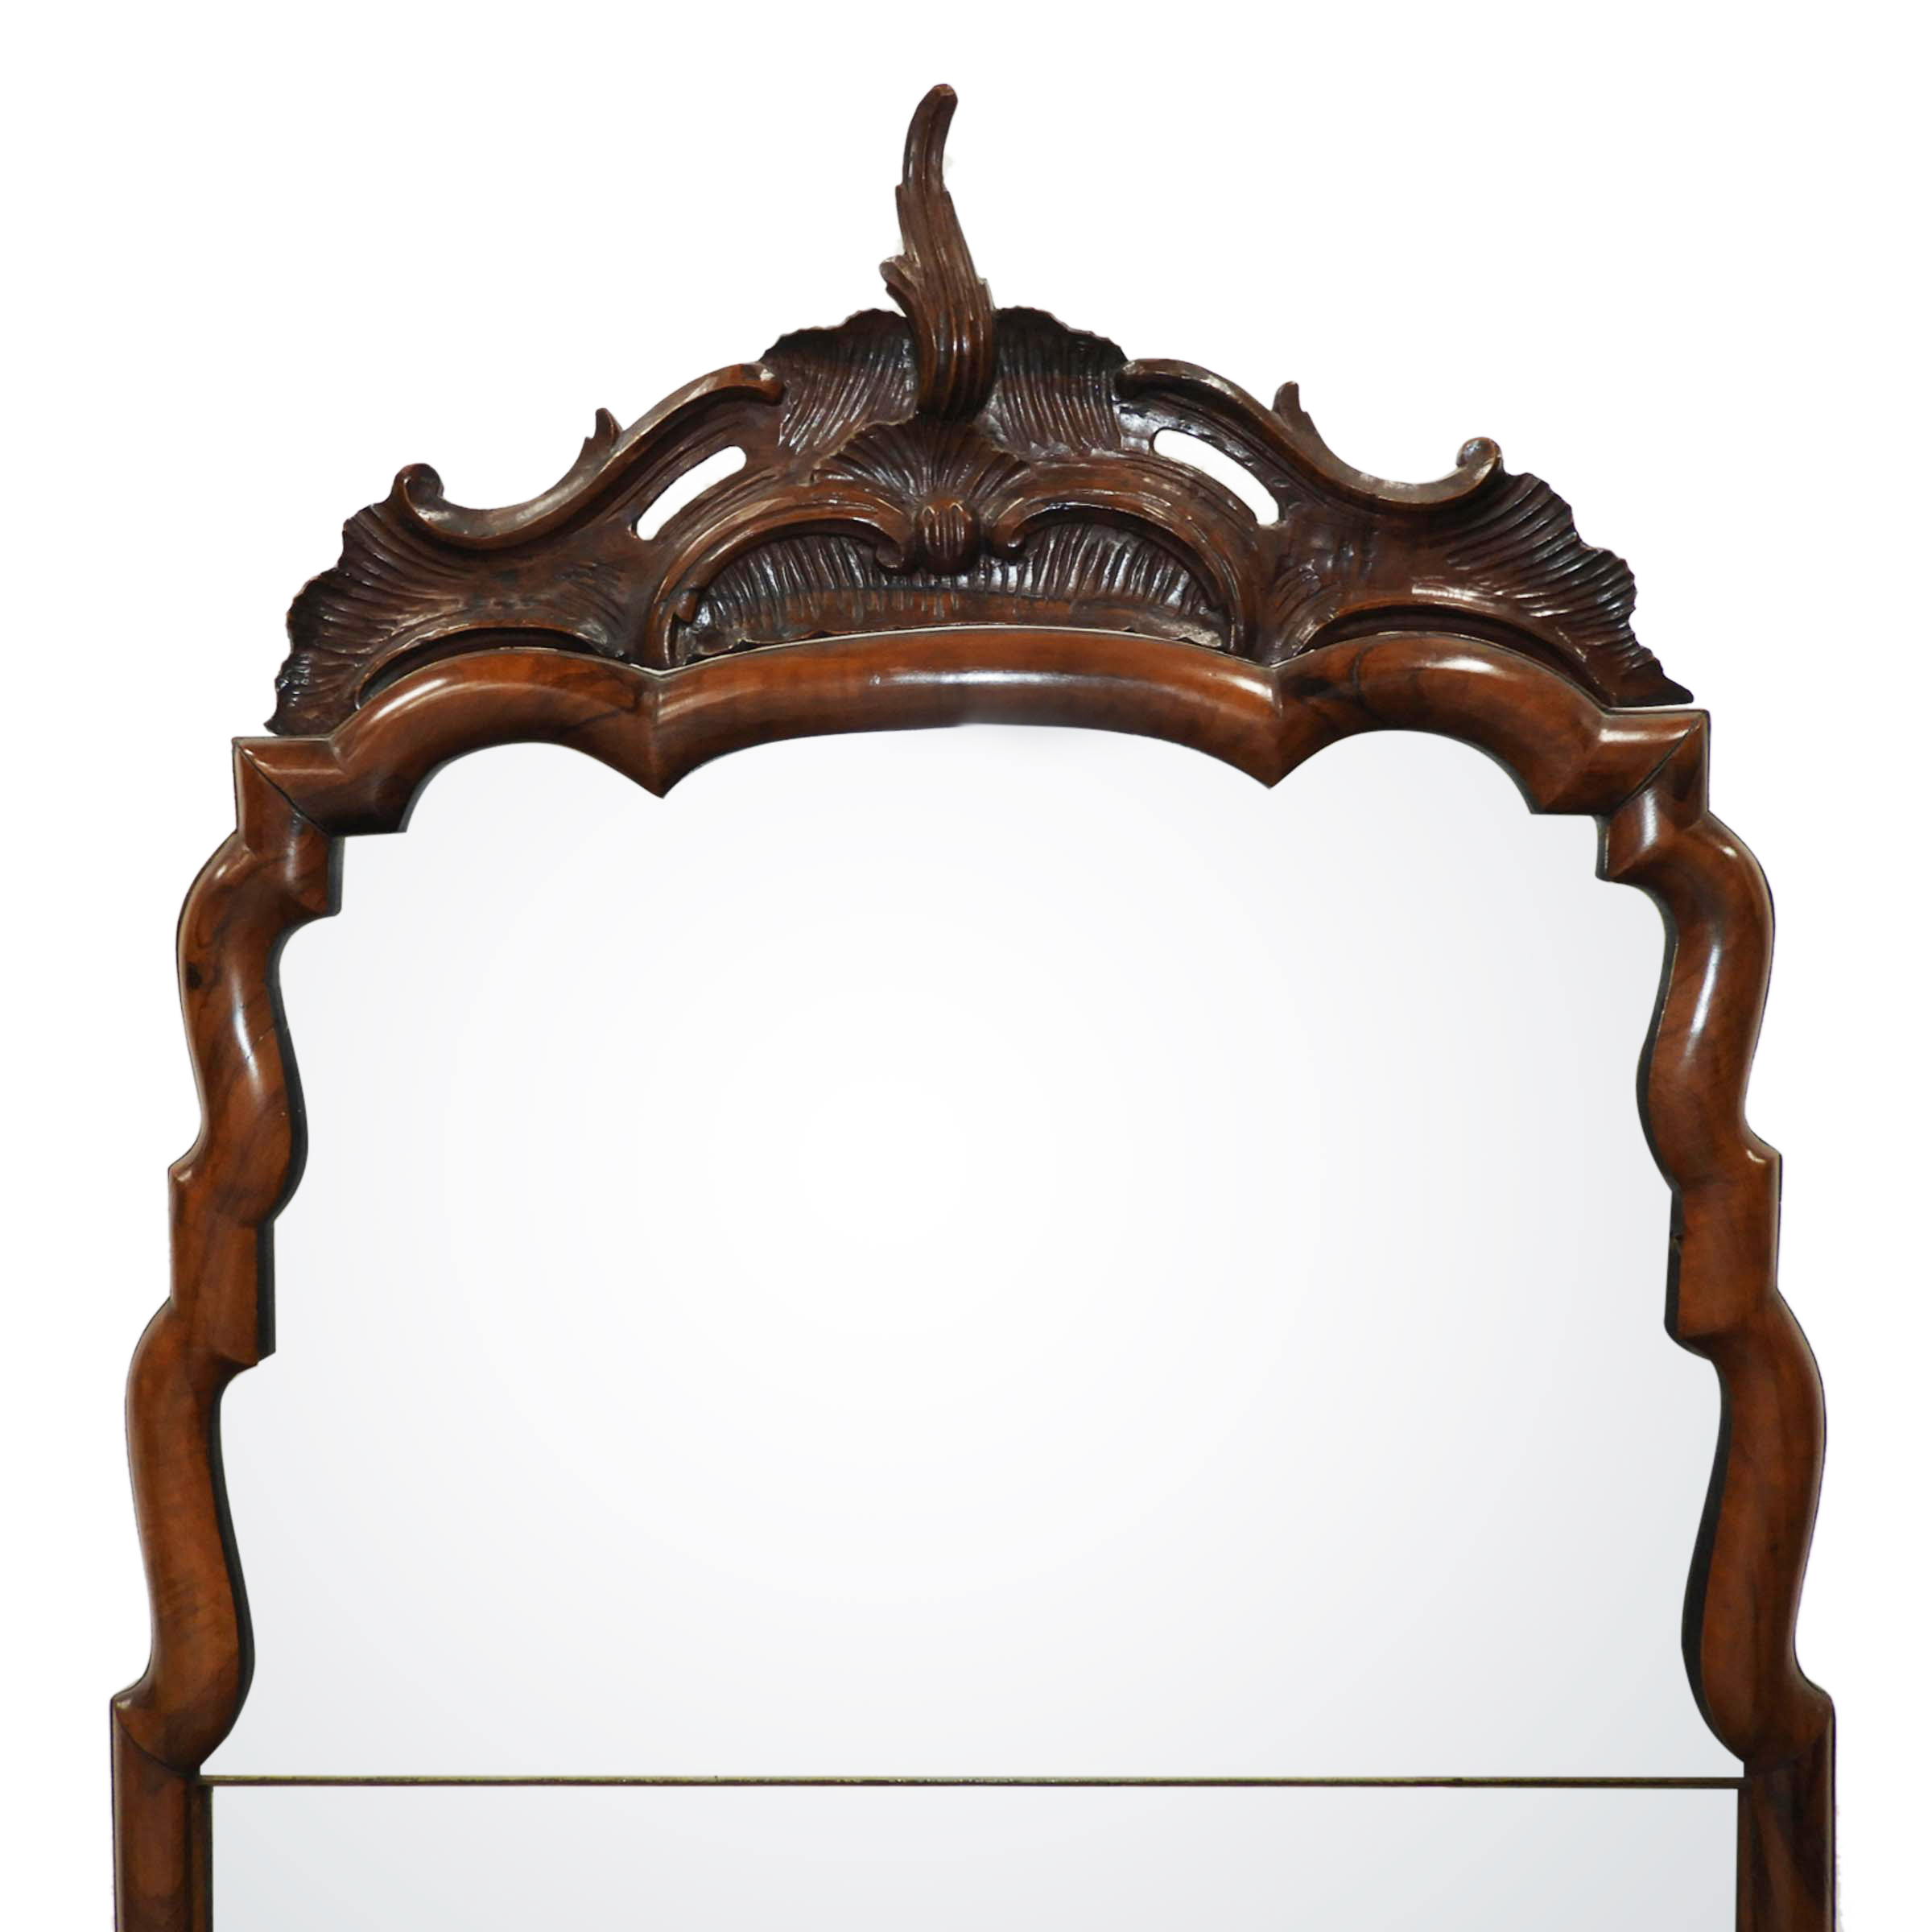 Queen Anne Walnut Mirror, early 18th century